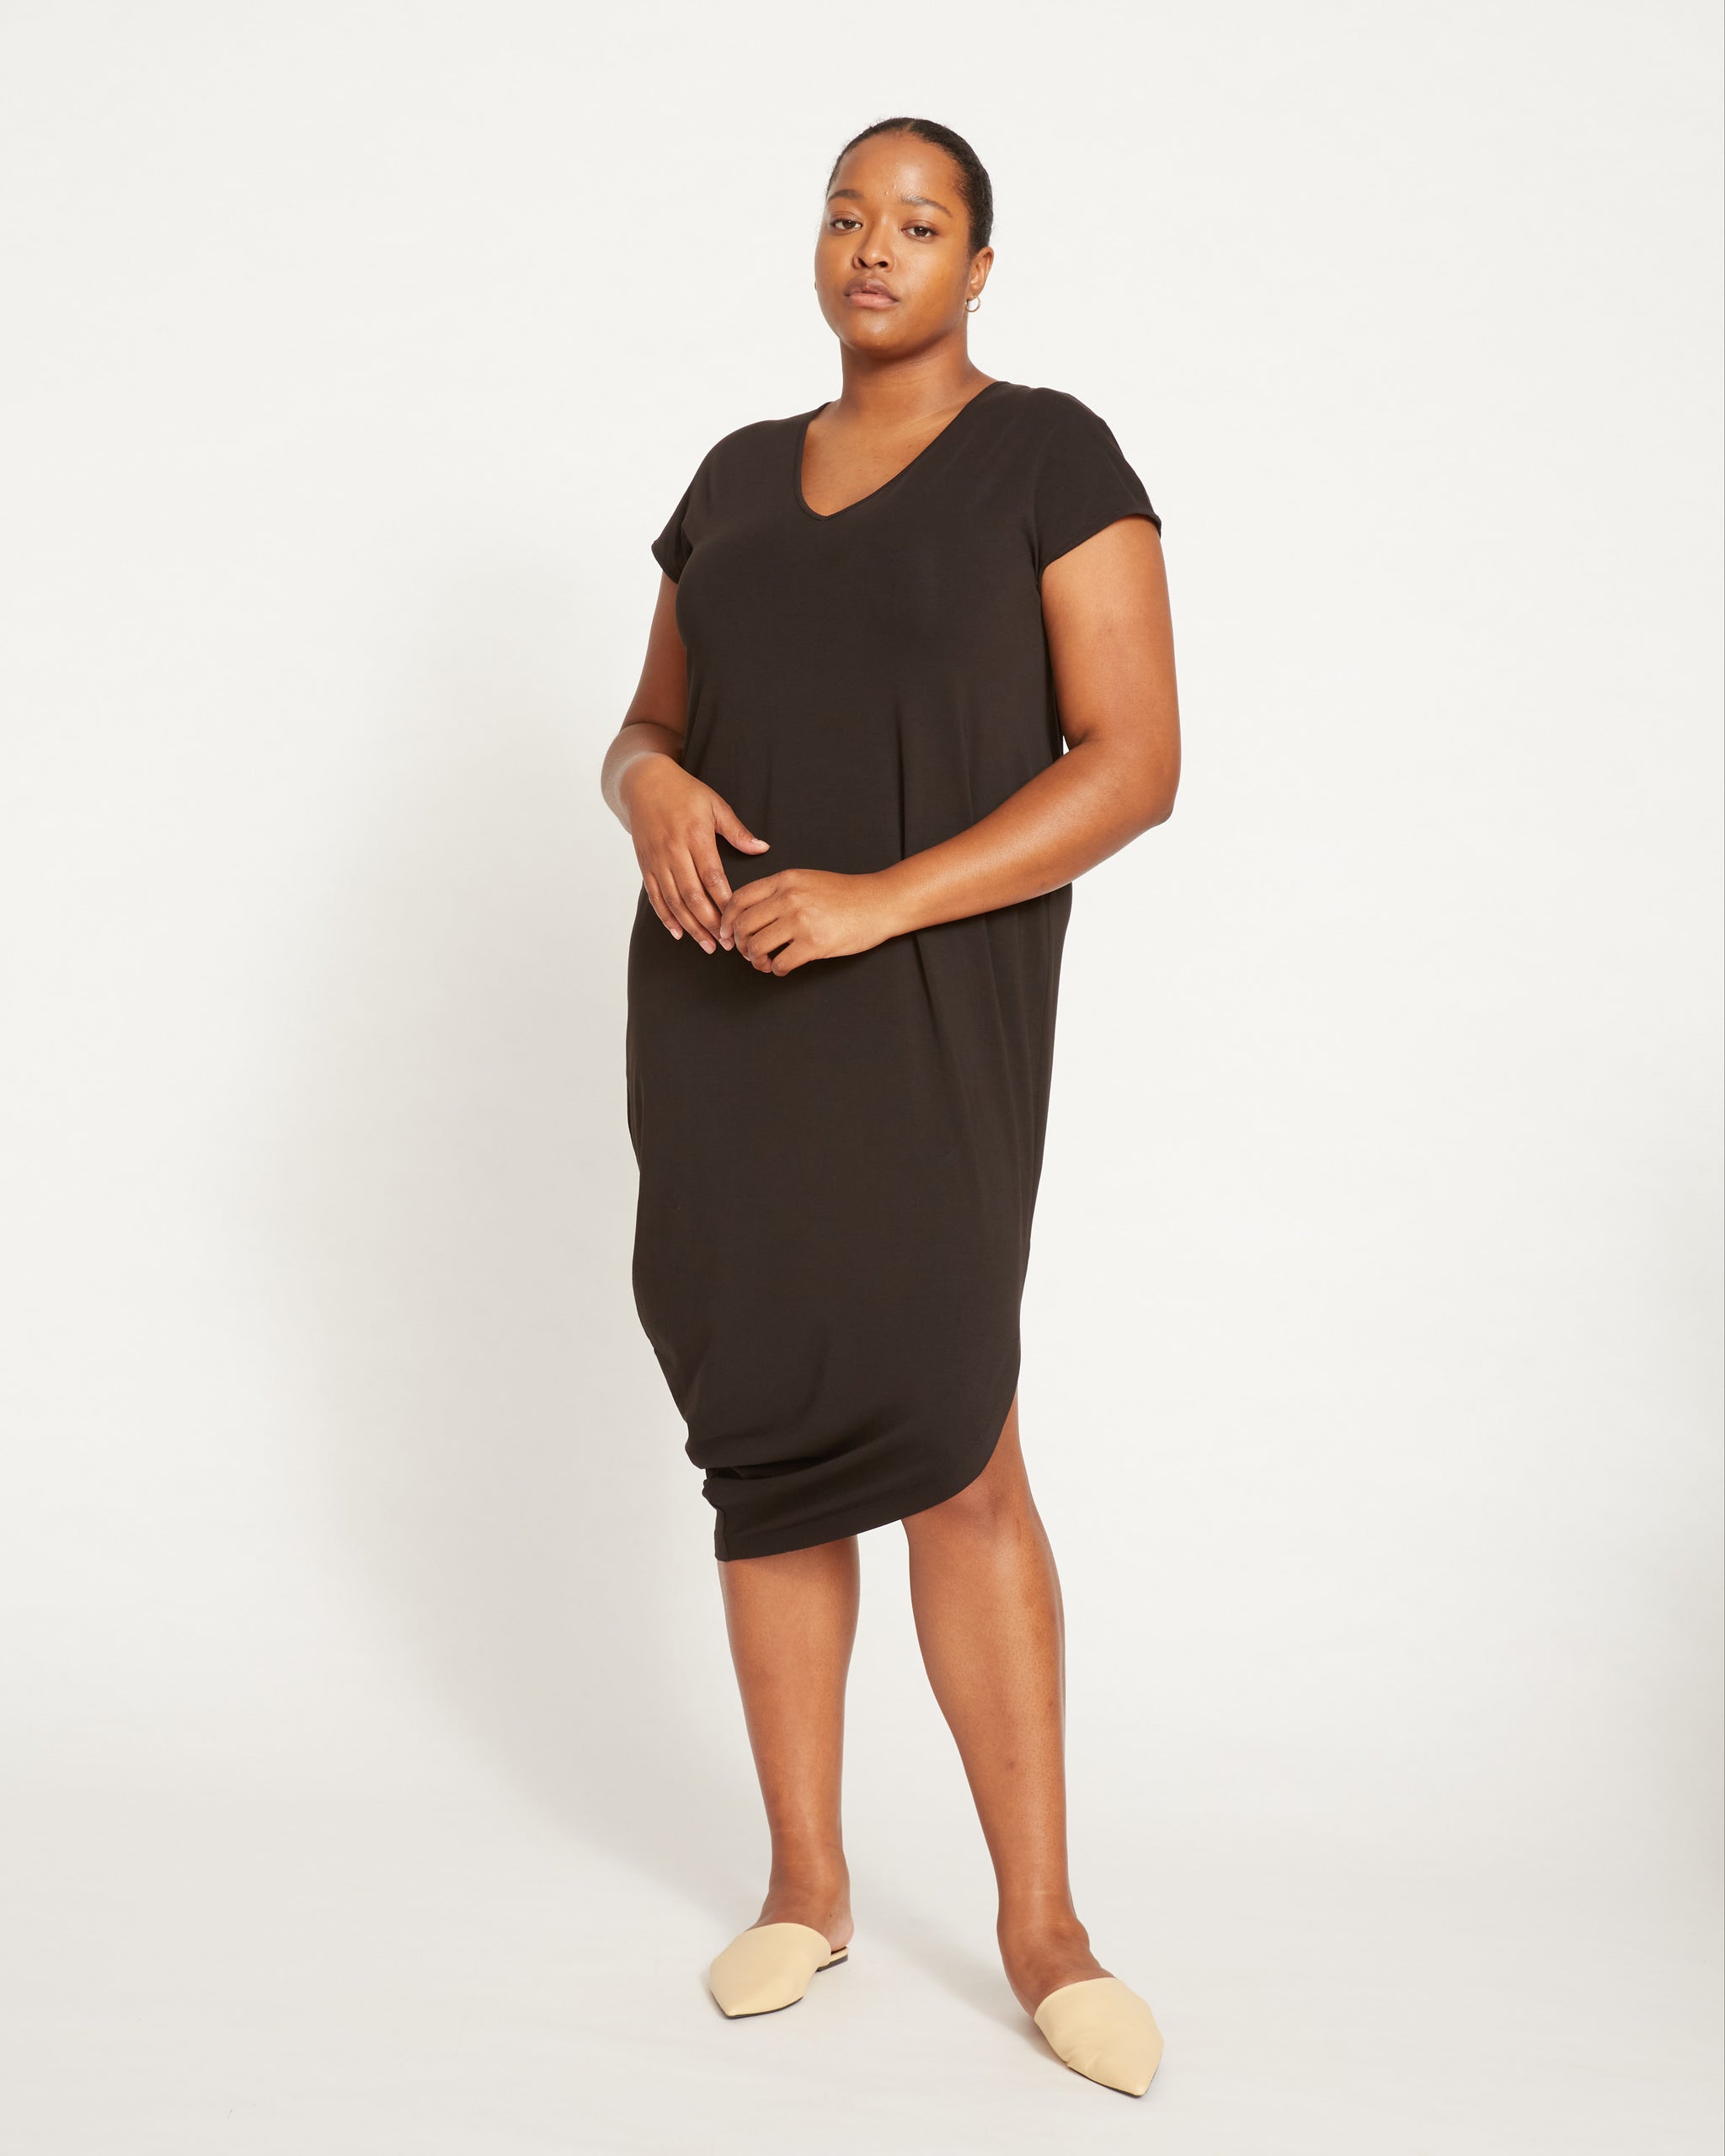 Size 38-40 Women's Plus Size Tops & Dressy Tops